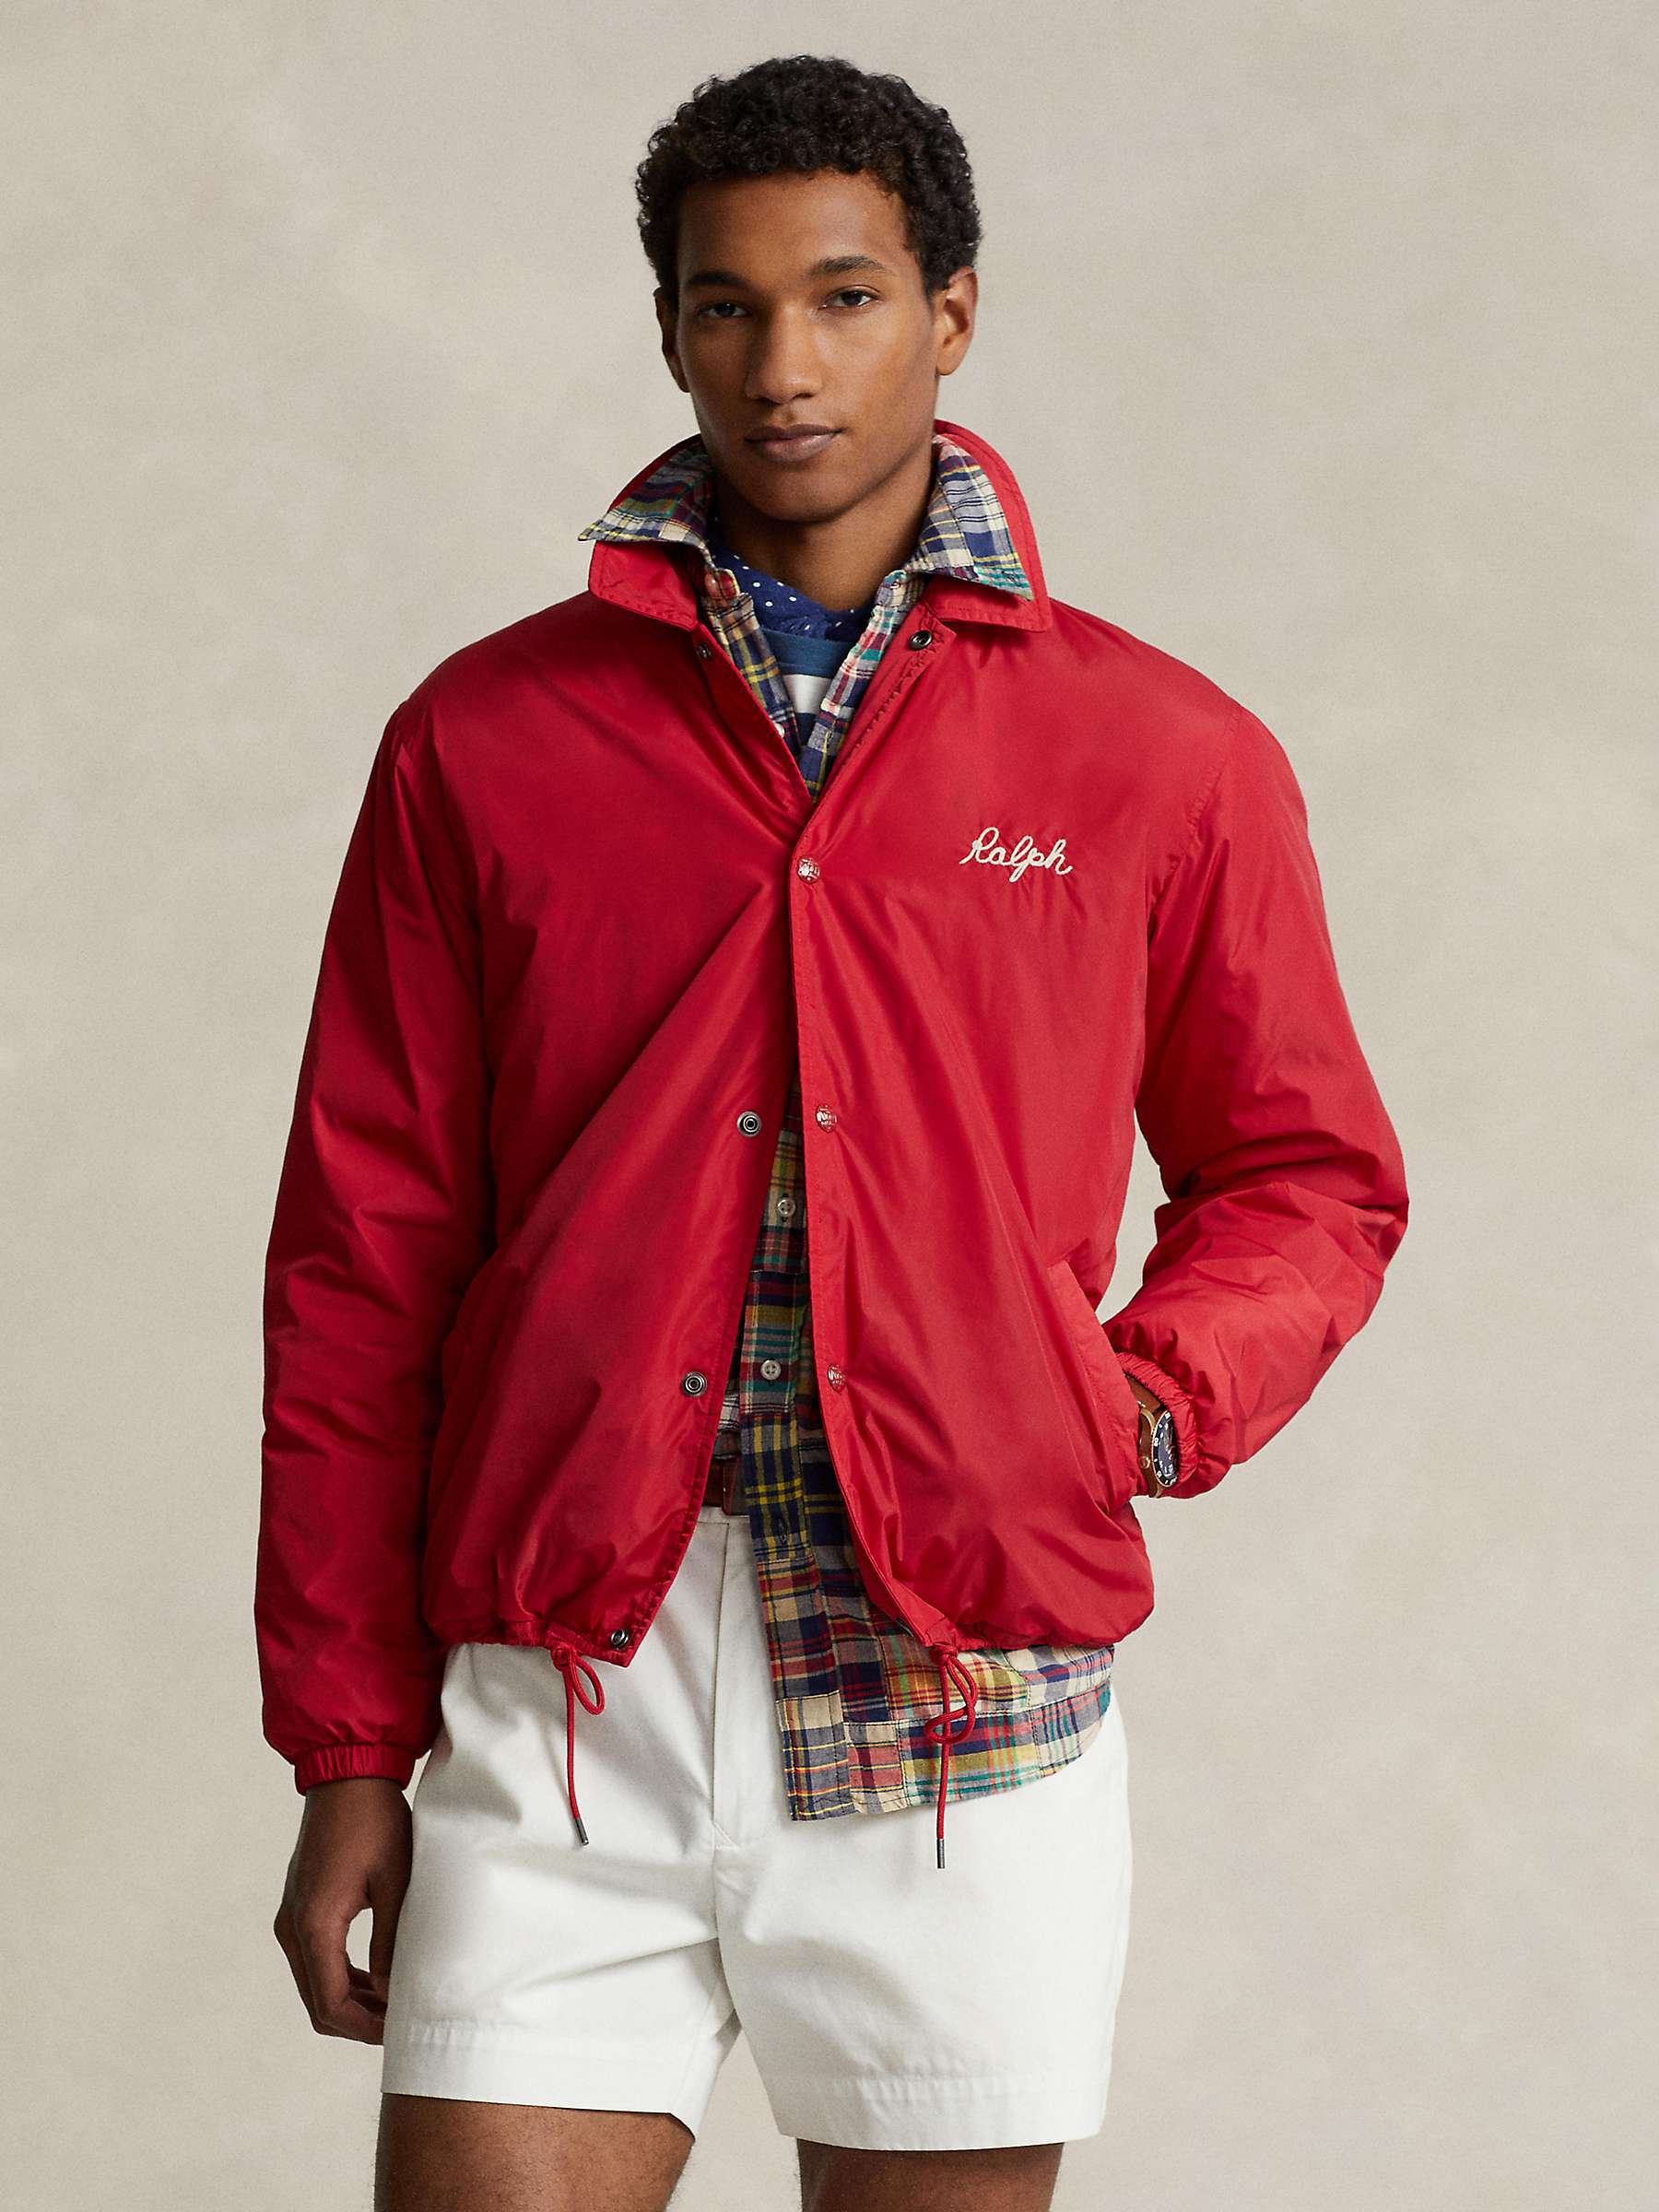 Buy Polo Ralph Lauren Coach Jacket, Red Online at johnlewis.com